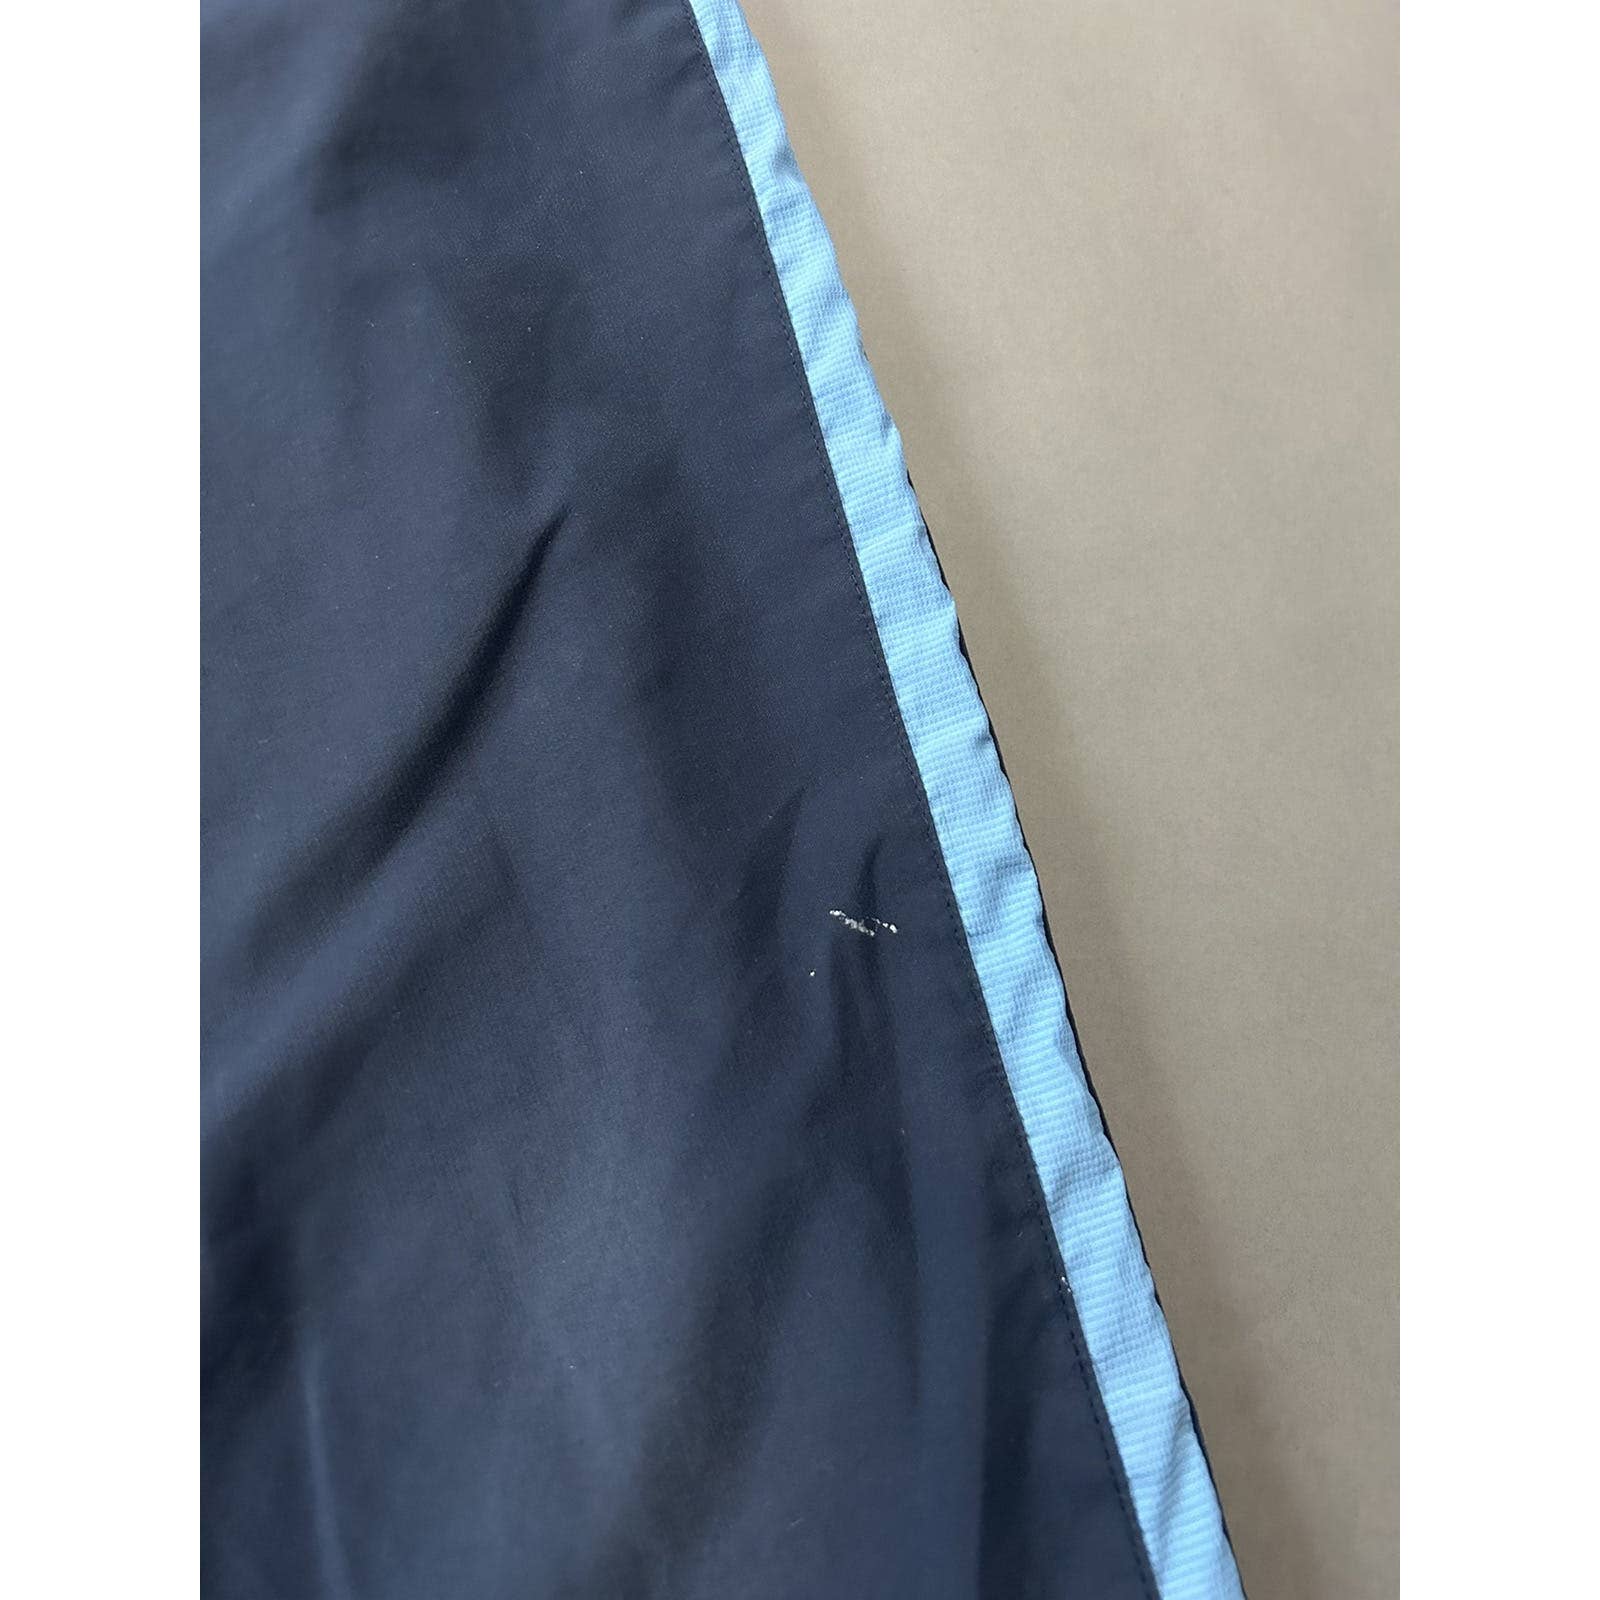 Nike vintage navy nylon track pants small logo 2000s parachute